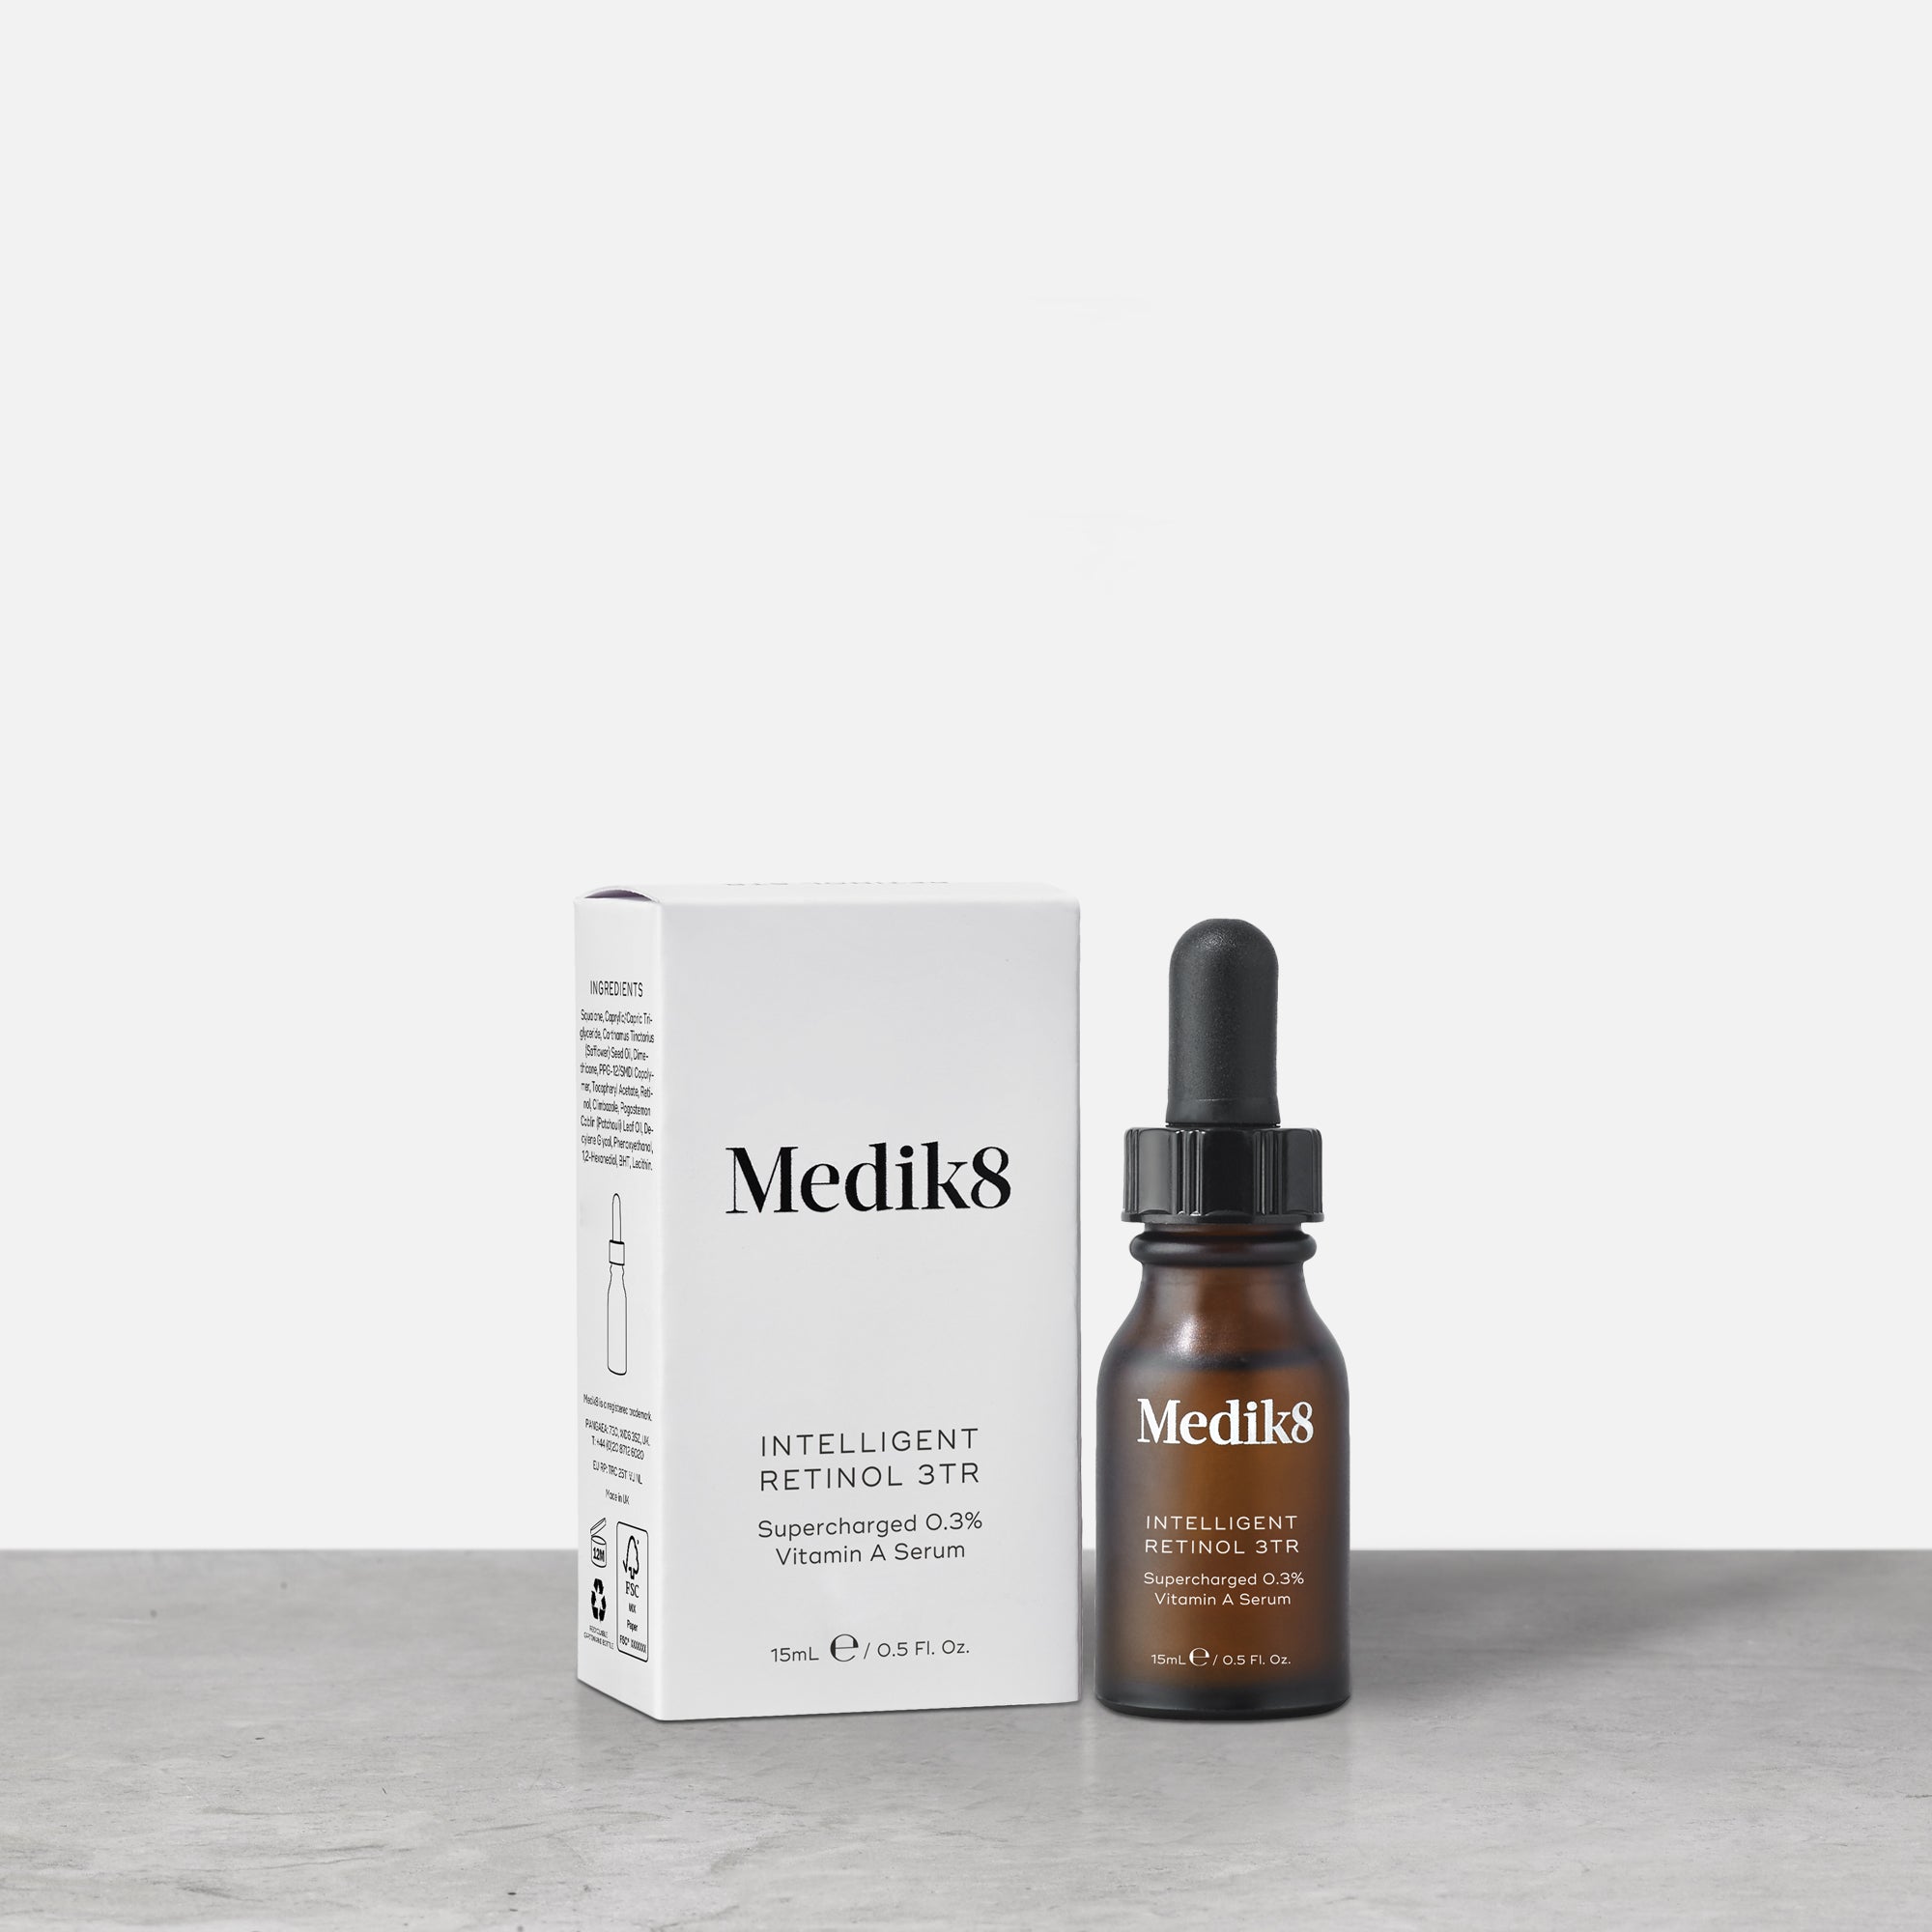 Intelligent Retinol 3TR™ by Medik8. A Supercharged 0.3% Vitamin A Serum